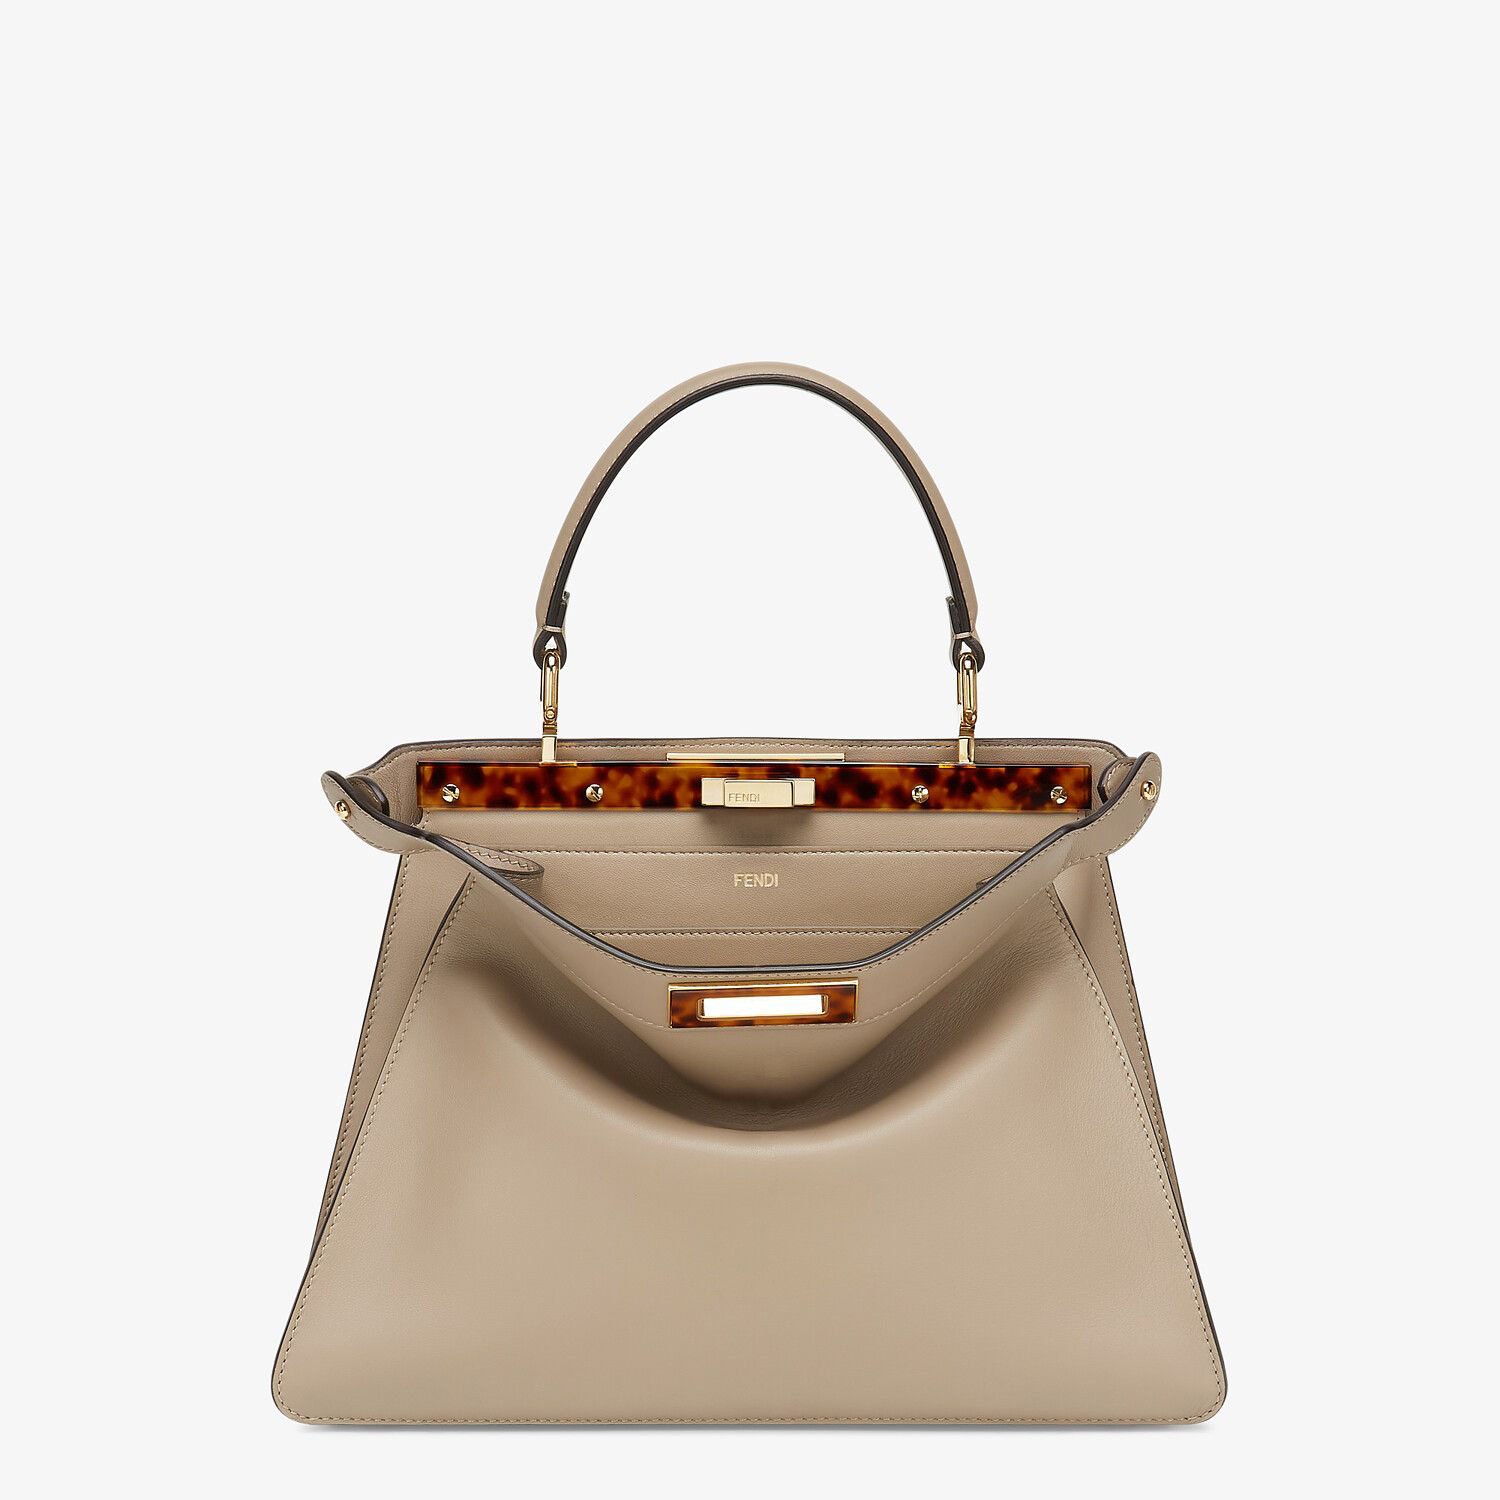 Luxury Designer Bag Investment Series: Hermès Kelly Bag Review - History,  Prices 2020 • Save. Spend. Splurge.